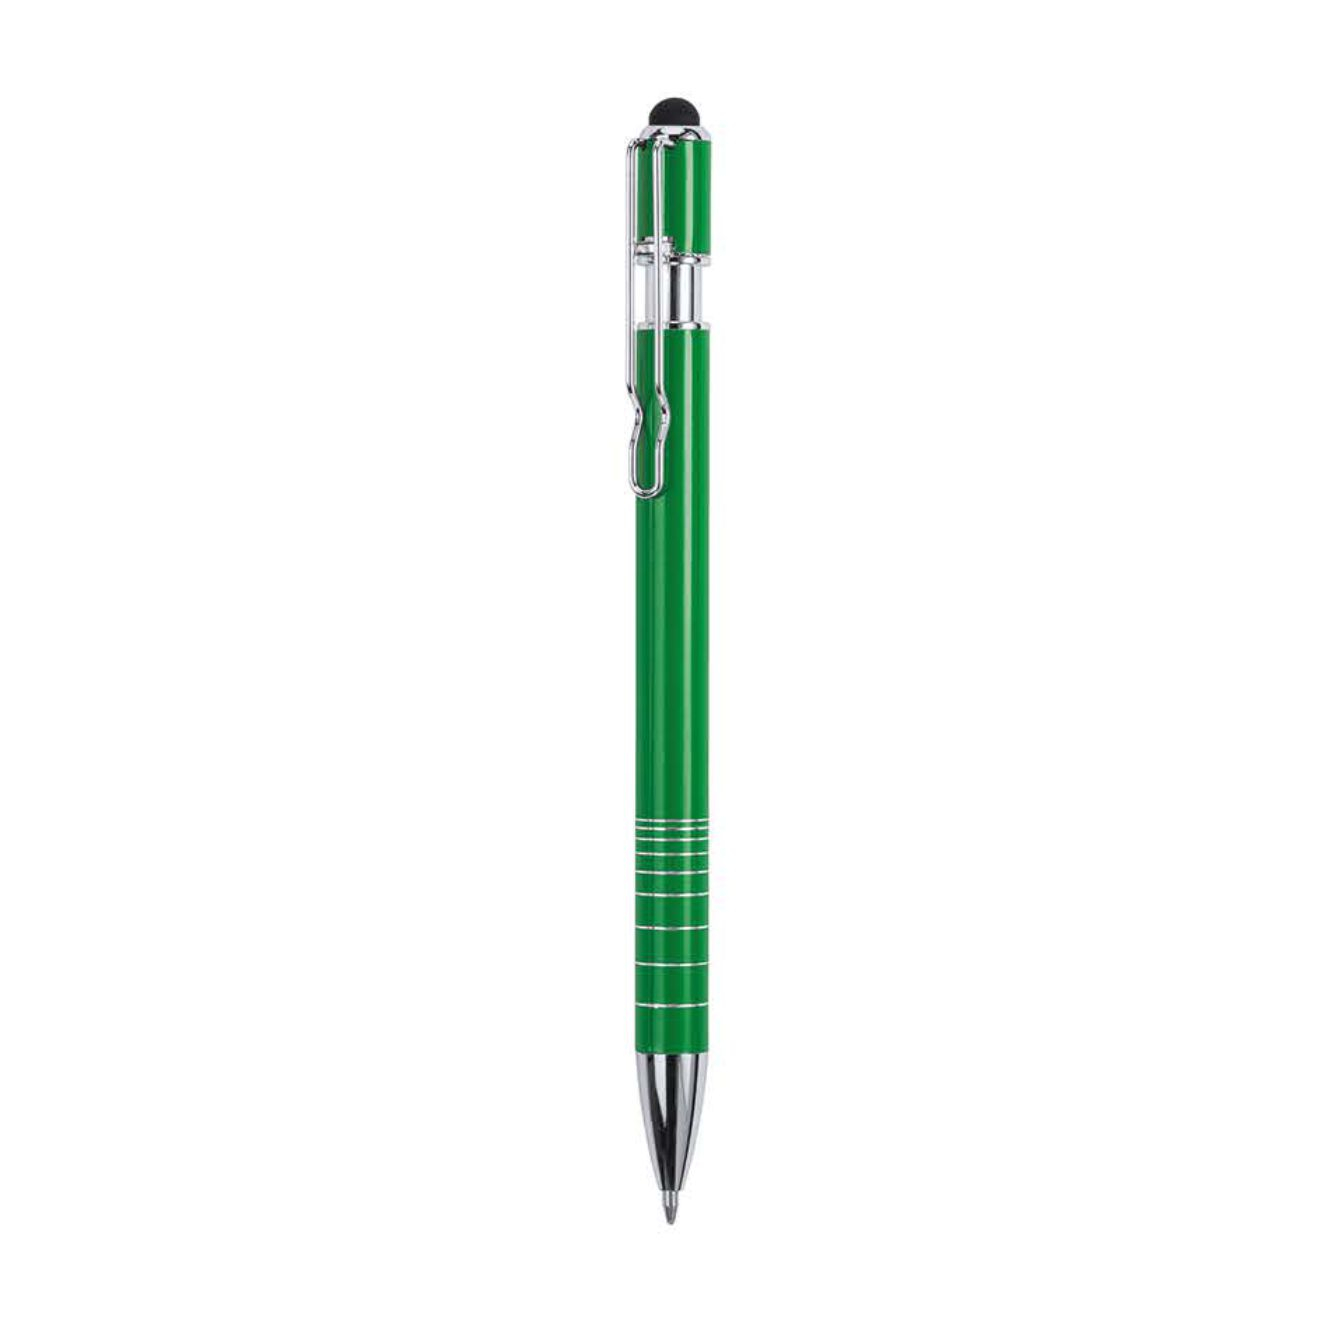 5041-merlo-penna-a-sfera-touch-in-metallo-verde.jpg